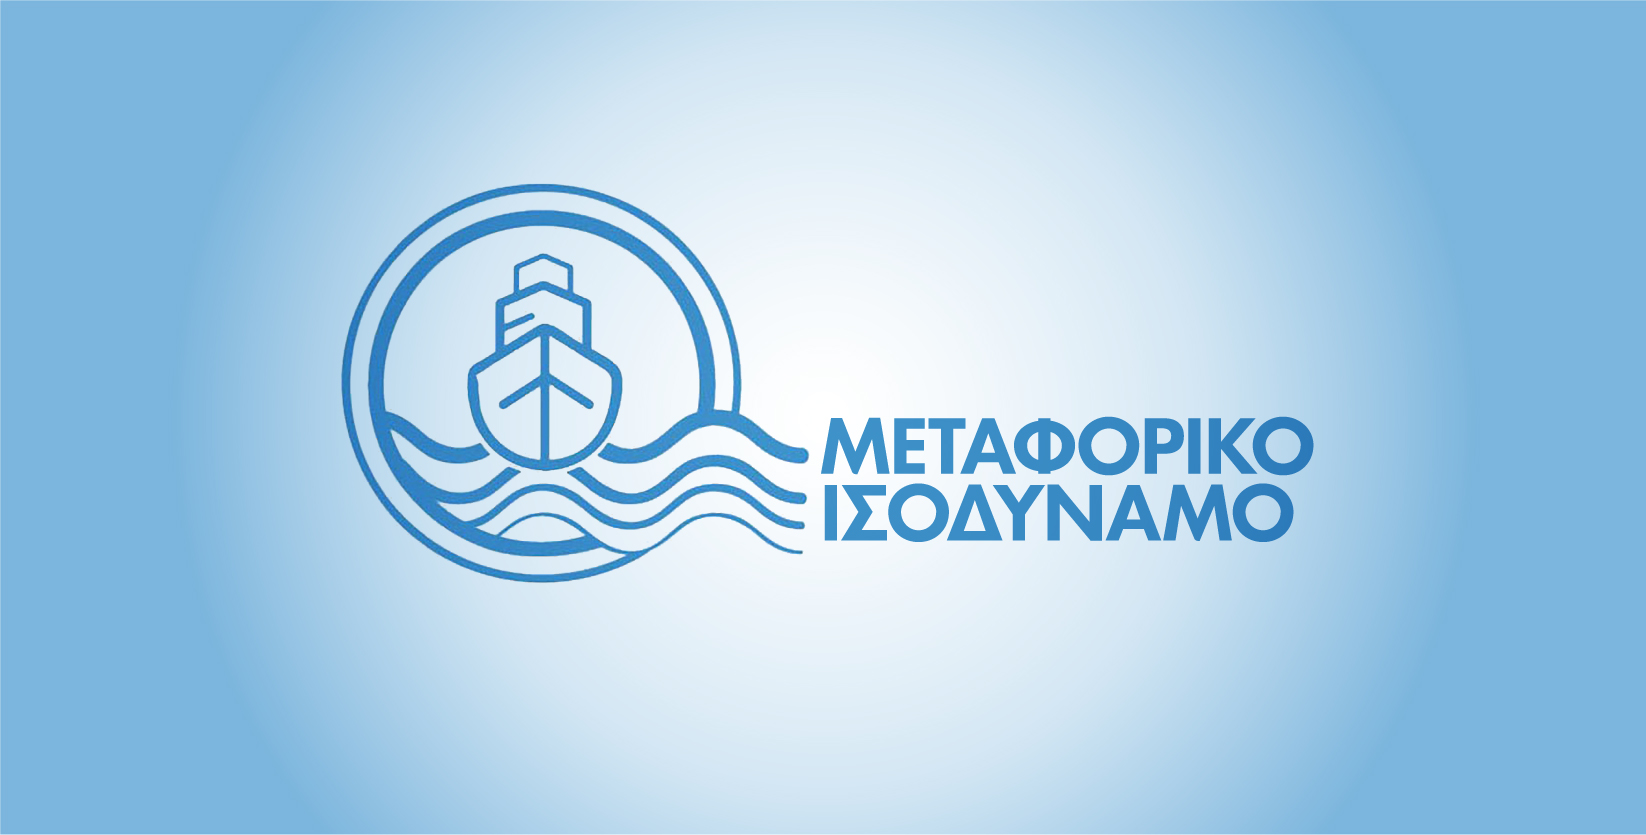 Metaforiko isodynamo Home page banner